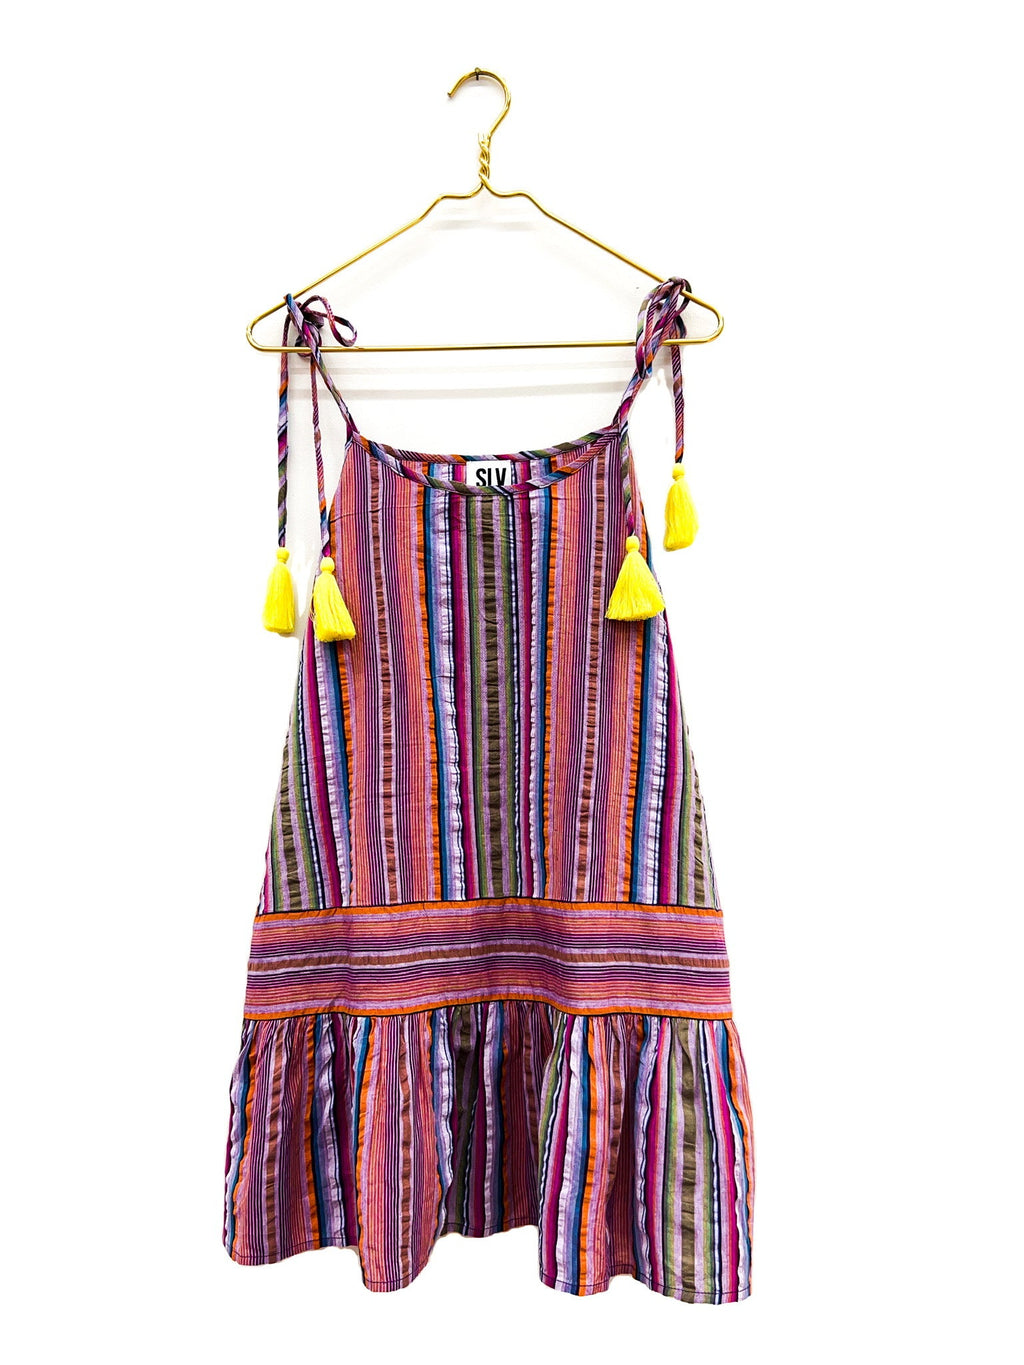 Shop the “Yalua Bandeau Mini Dress” at Onfemme #onfemmebabe